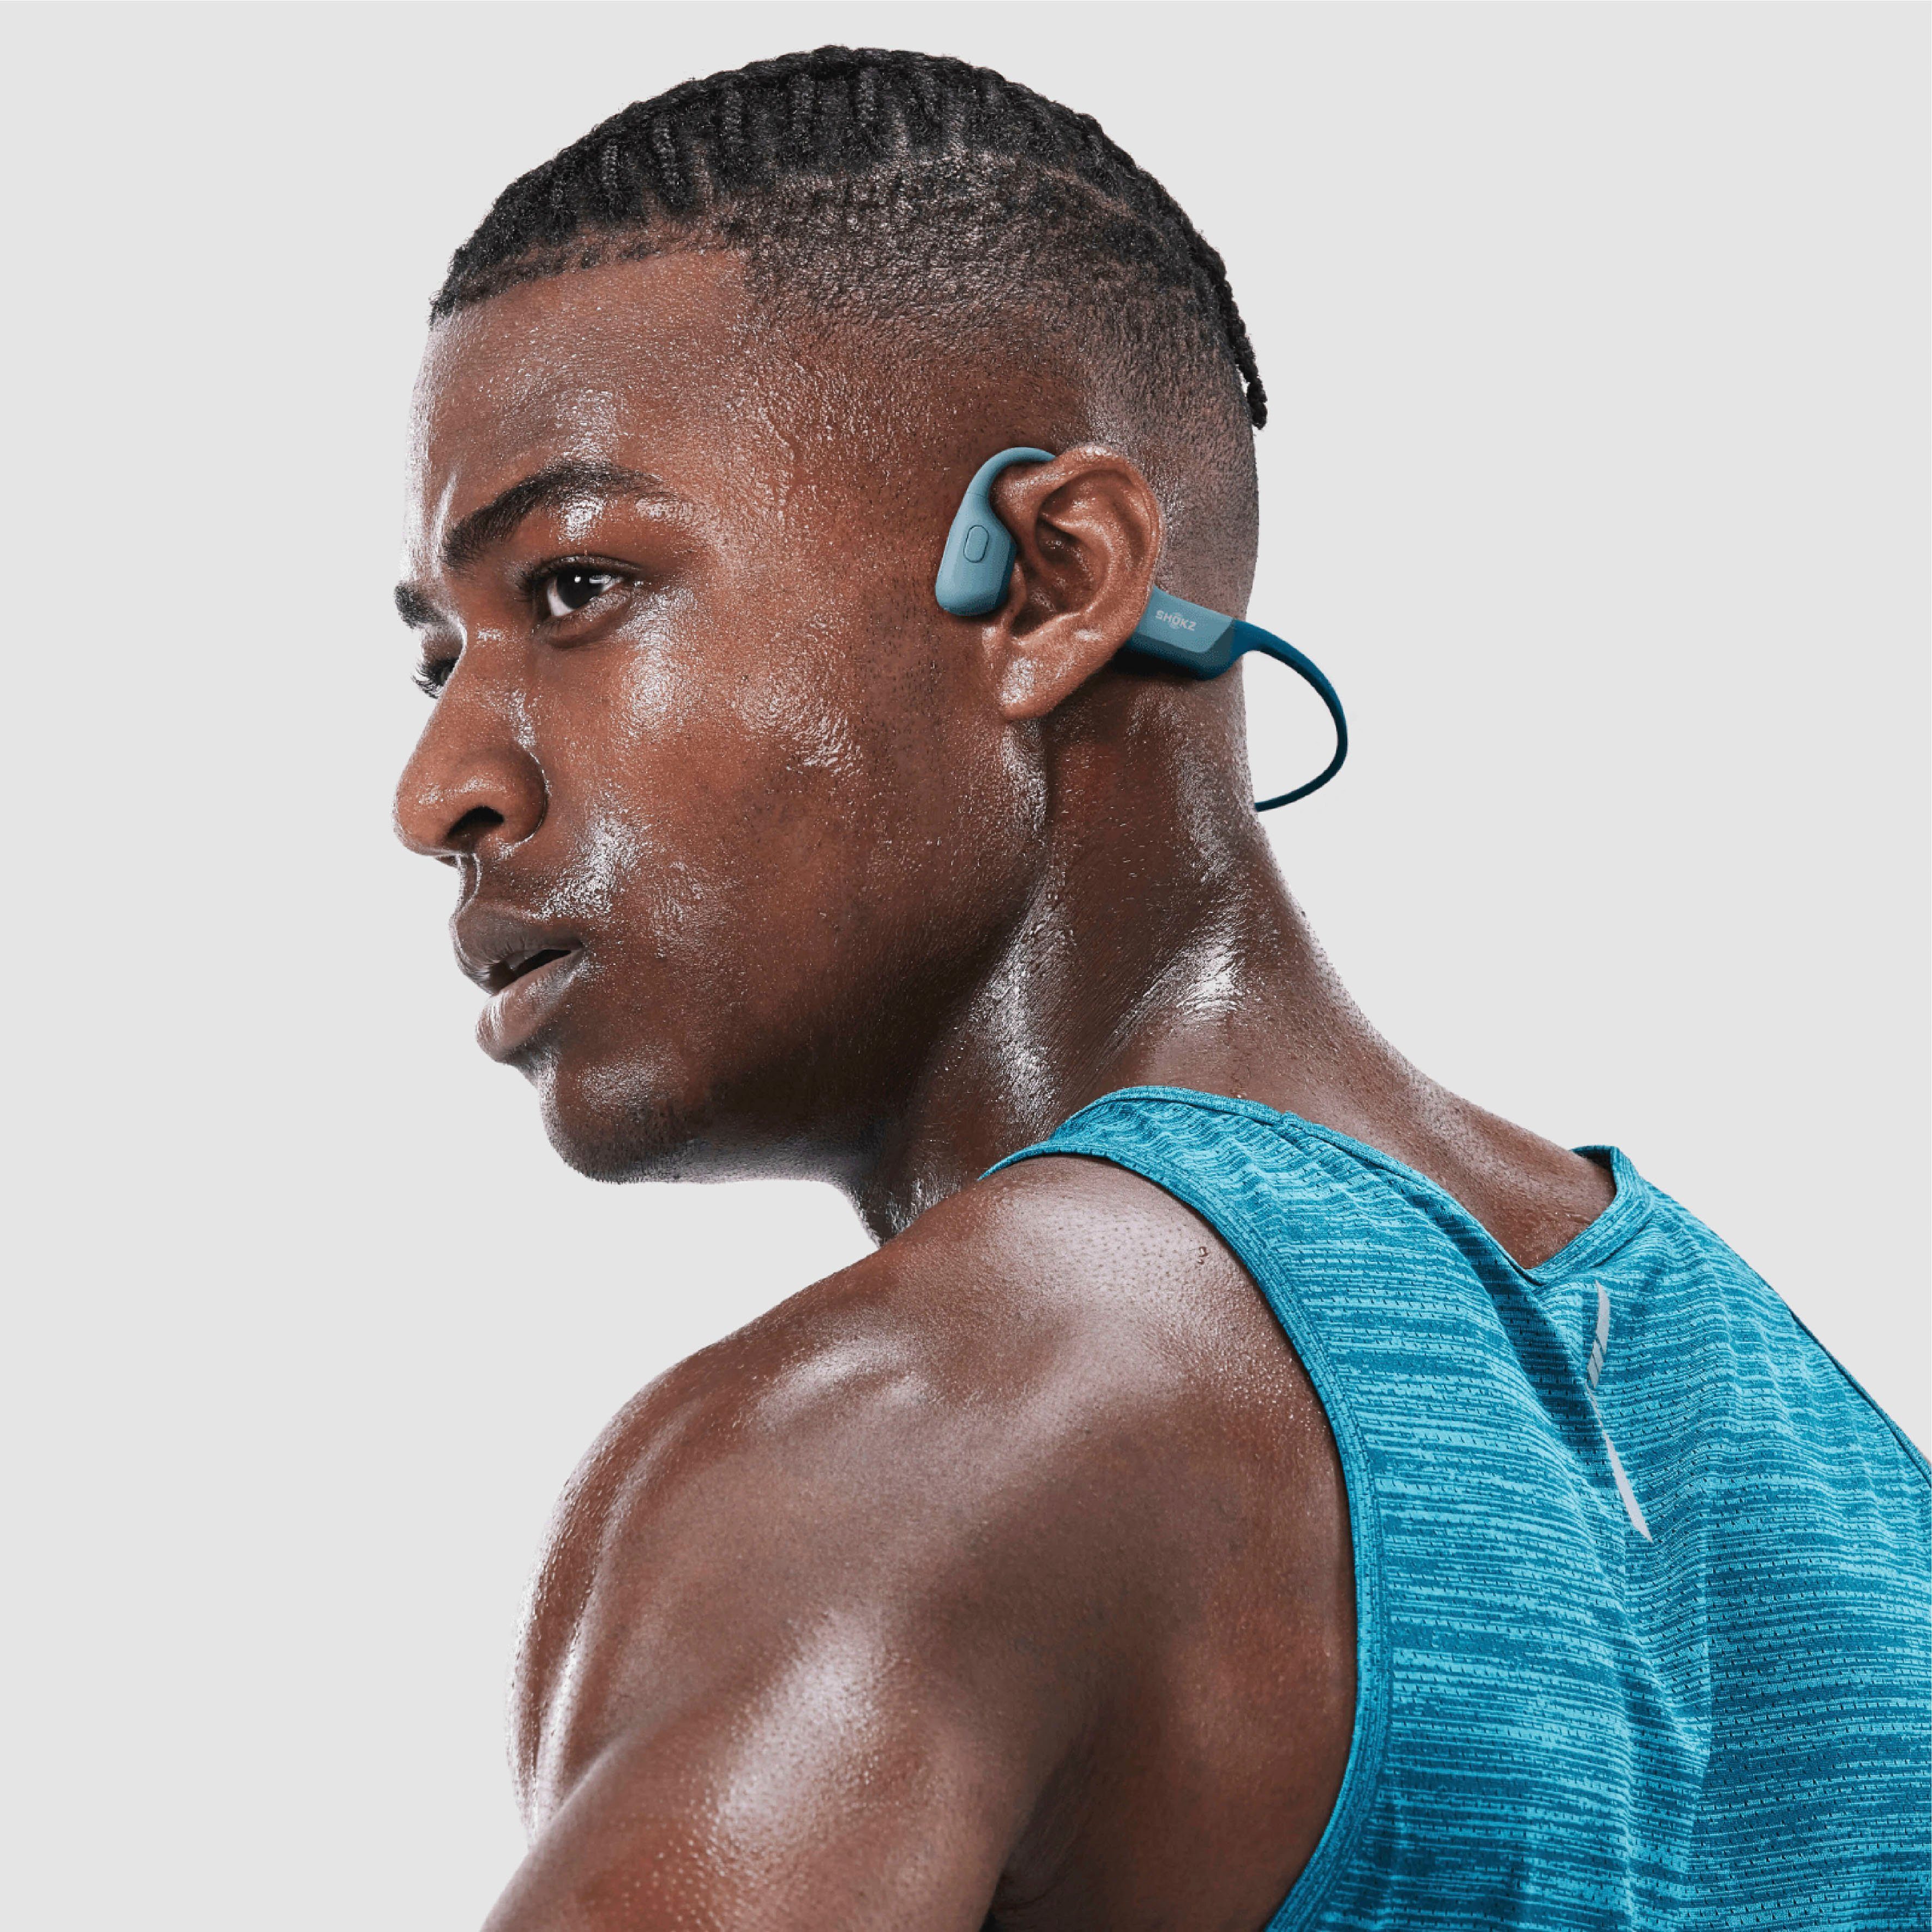 blau OpenRun (Noise-Cancelling, Shokz Pro Bluetooth) Sport-Kopfhörer